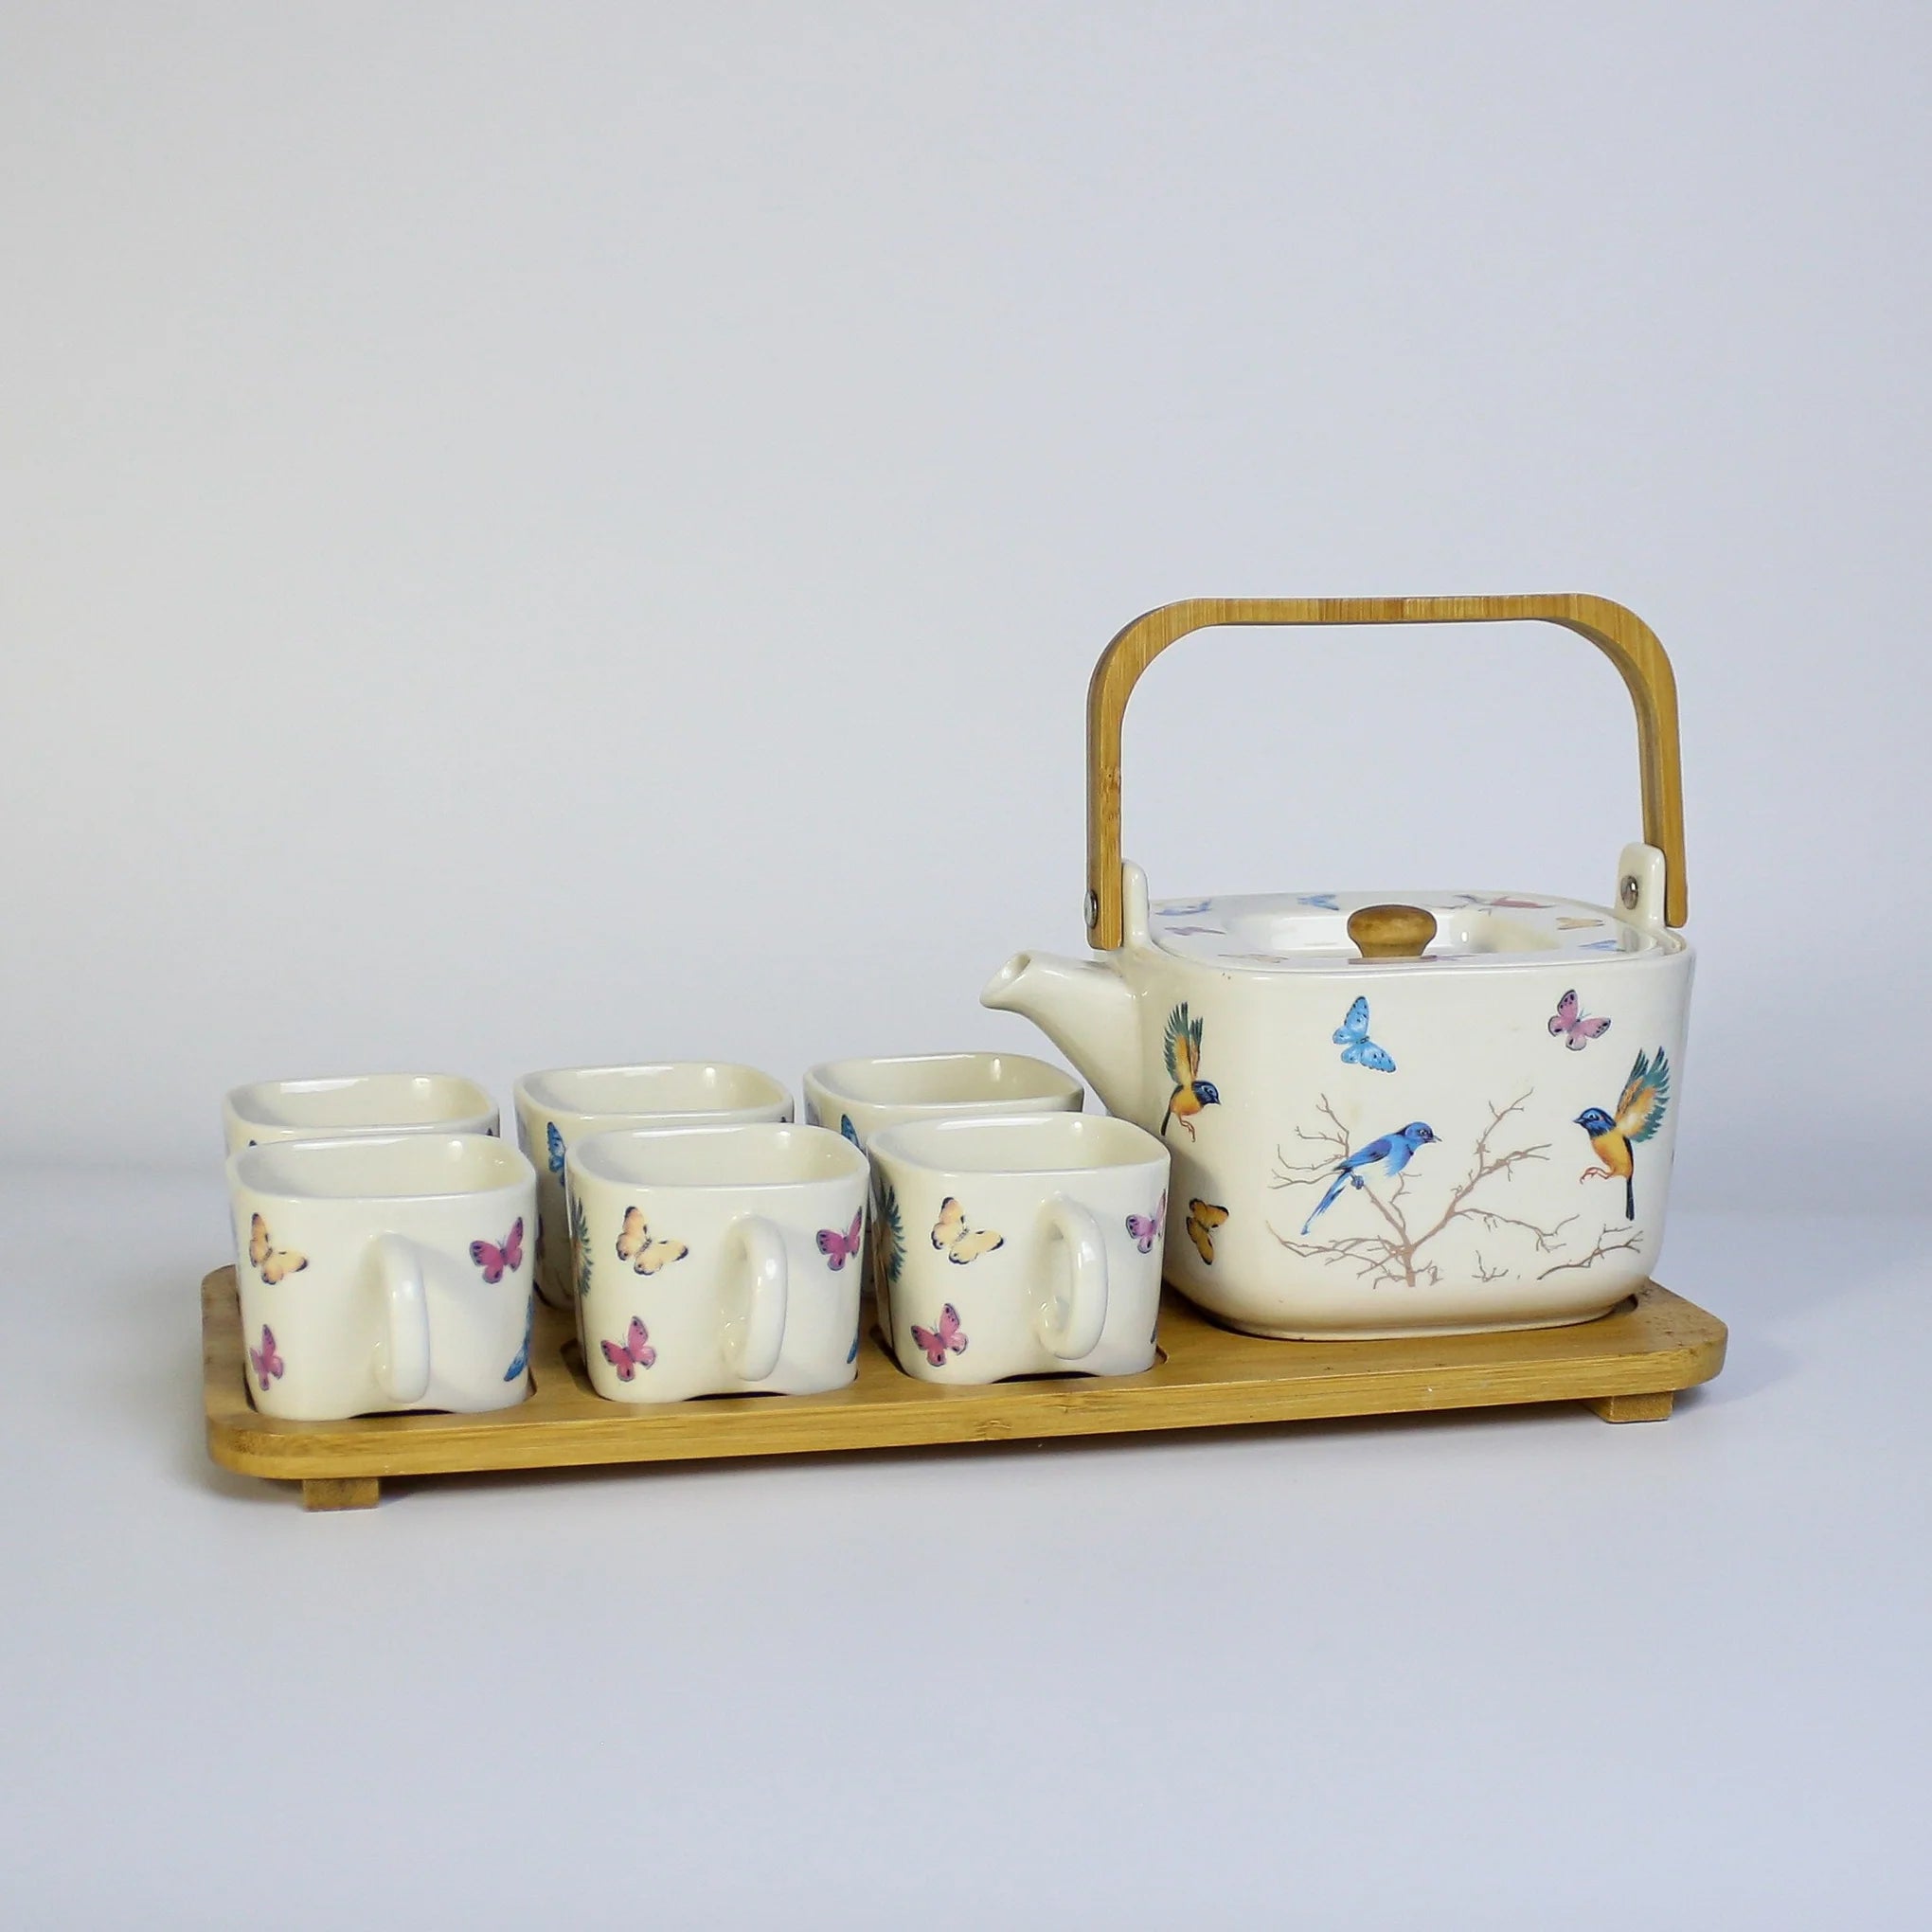 Songbirds Ceramic Coffee set / Tea set  With Bamboo Tray 8 Pcs High Quality